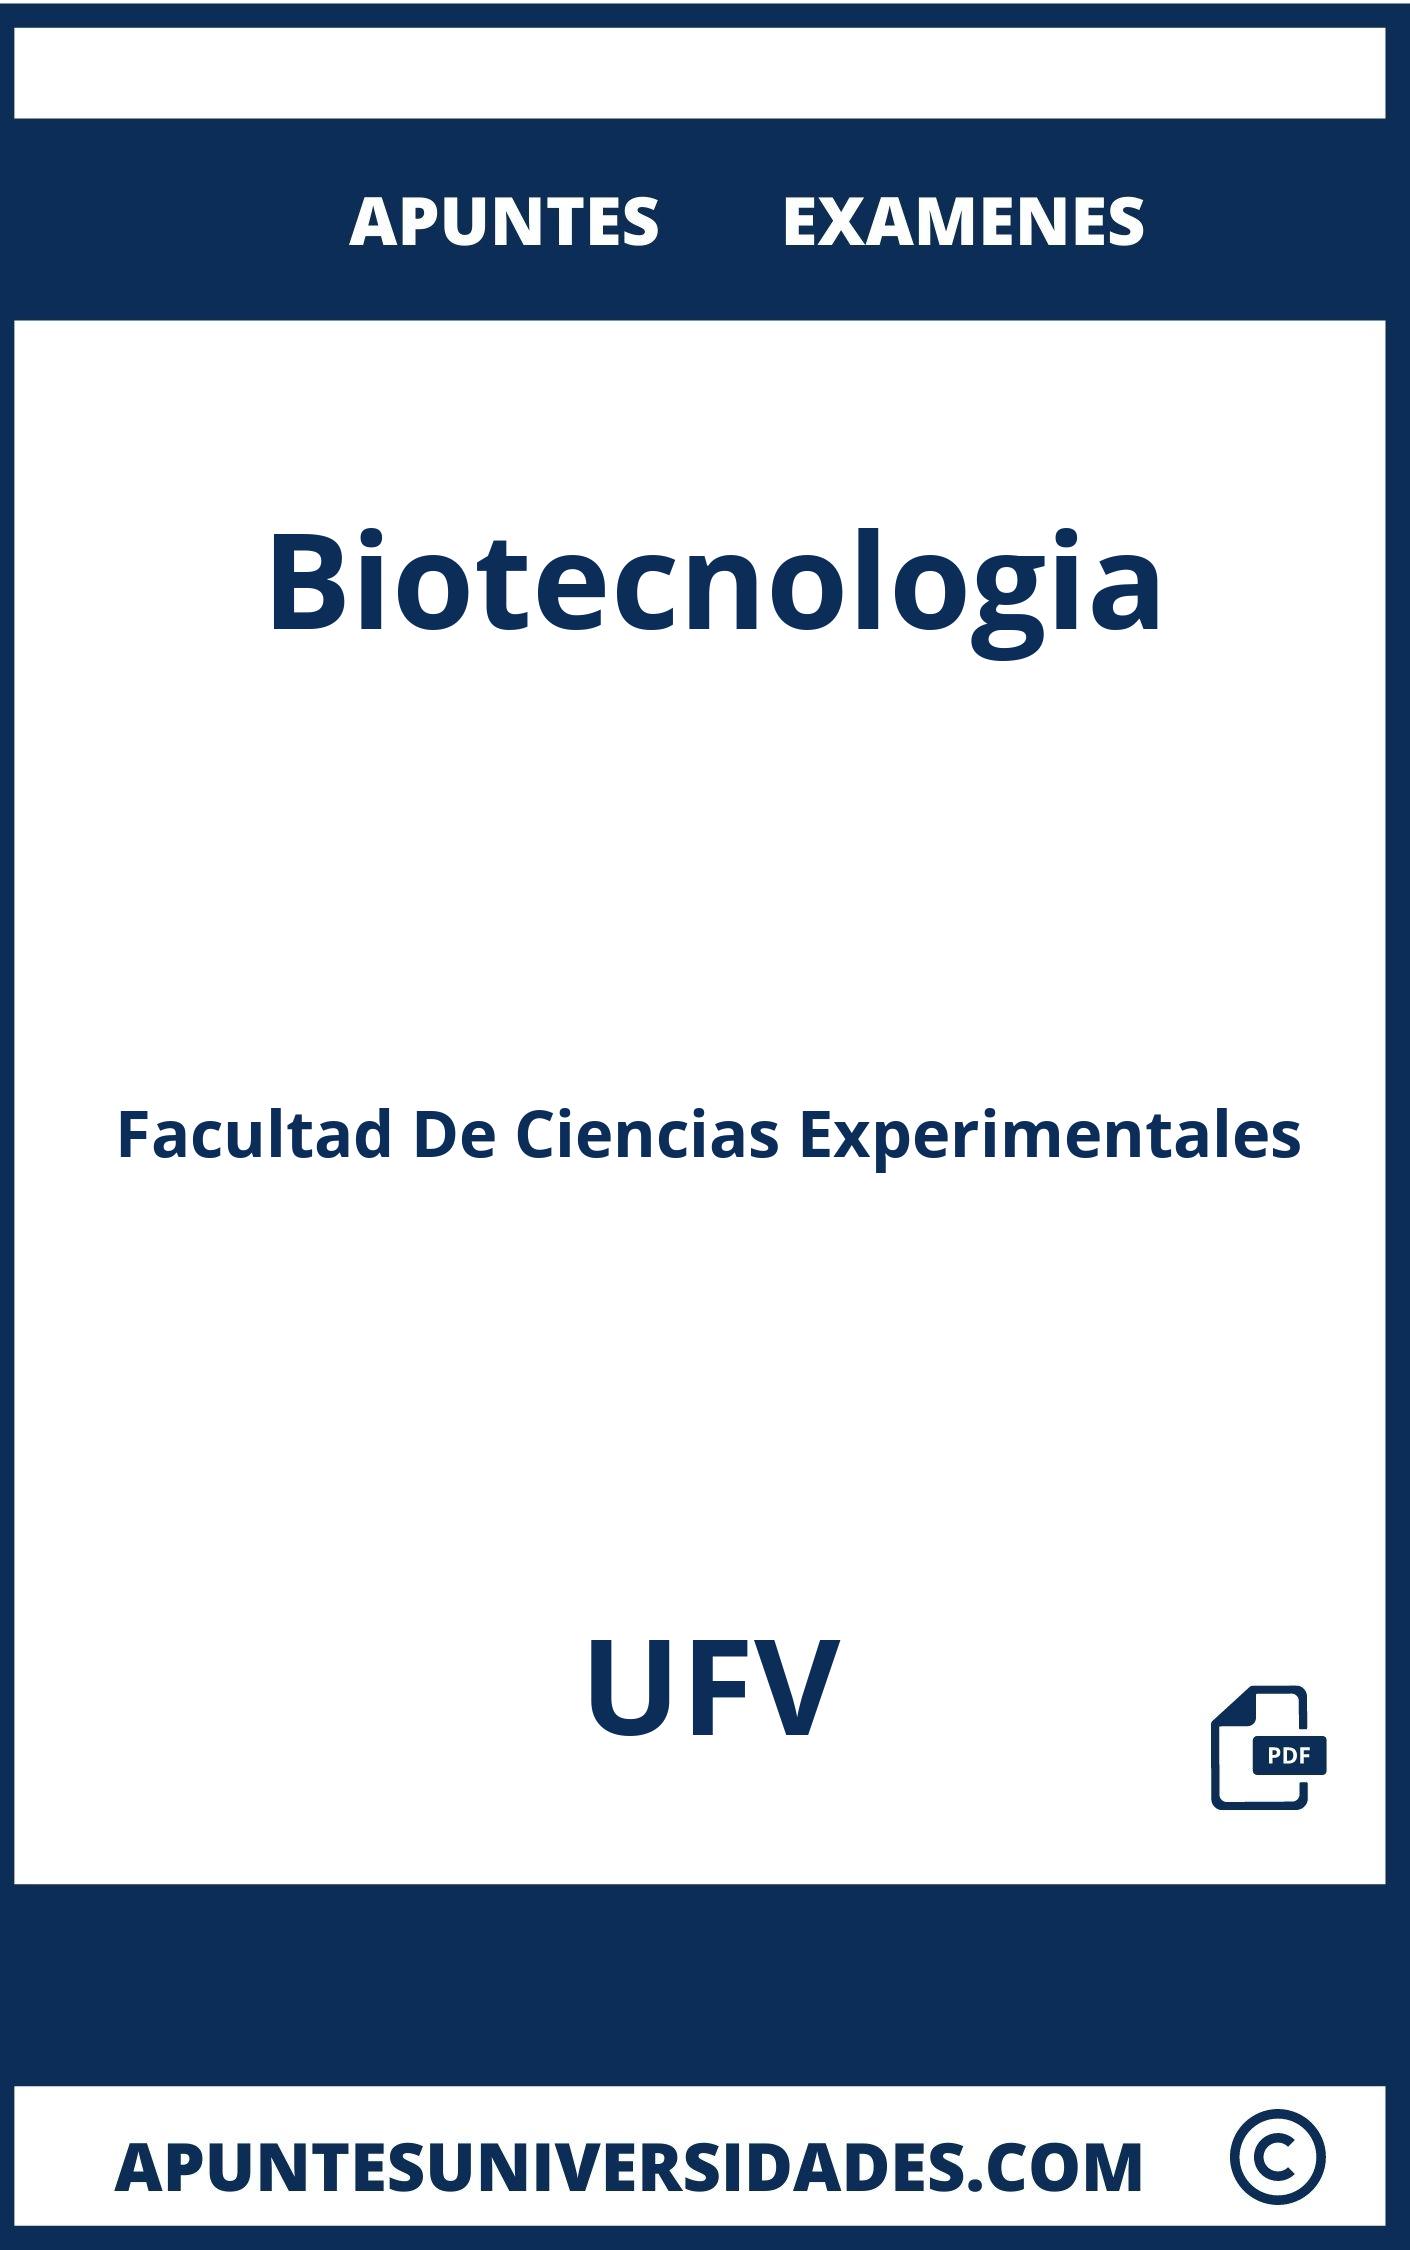 Examenes y Apuntes Biotecnologia UFV